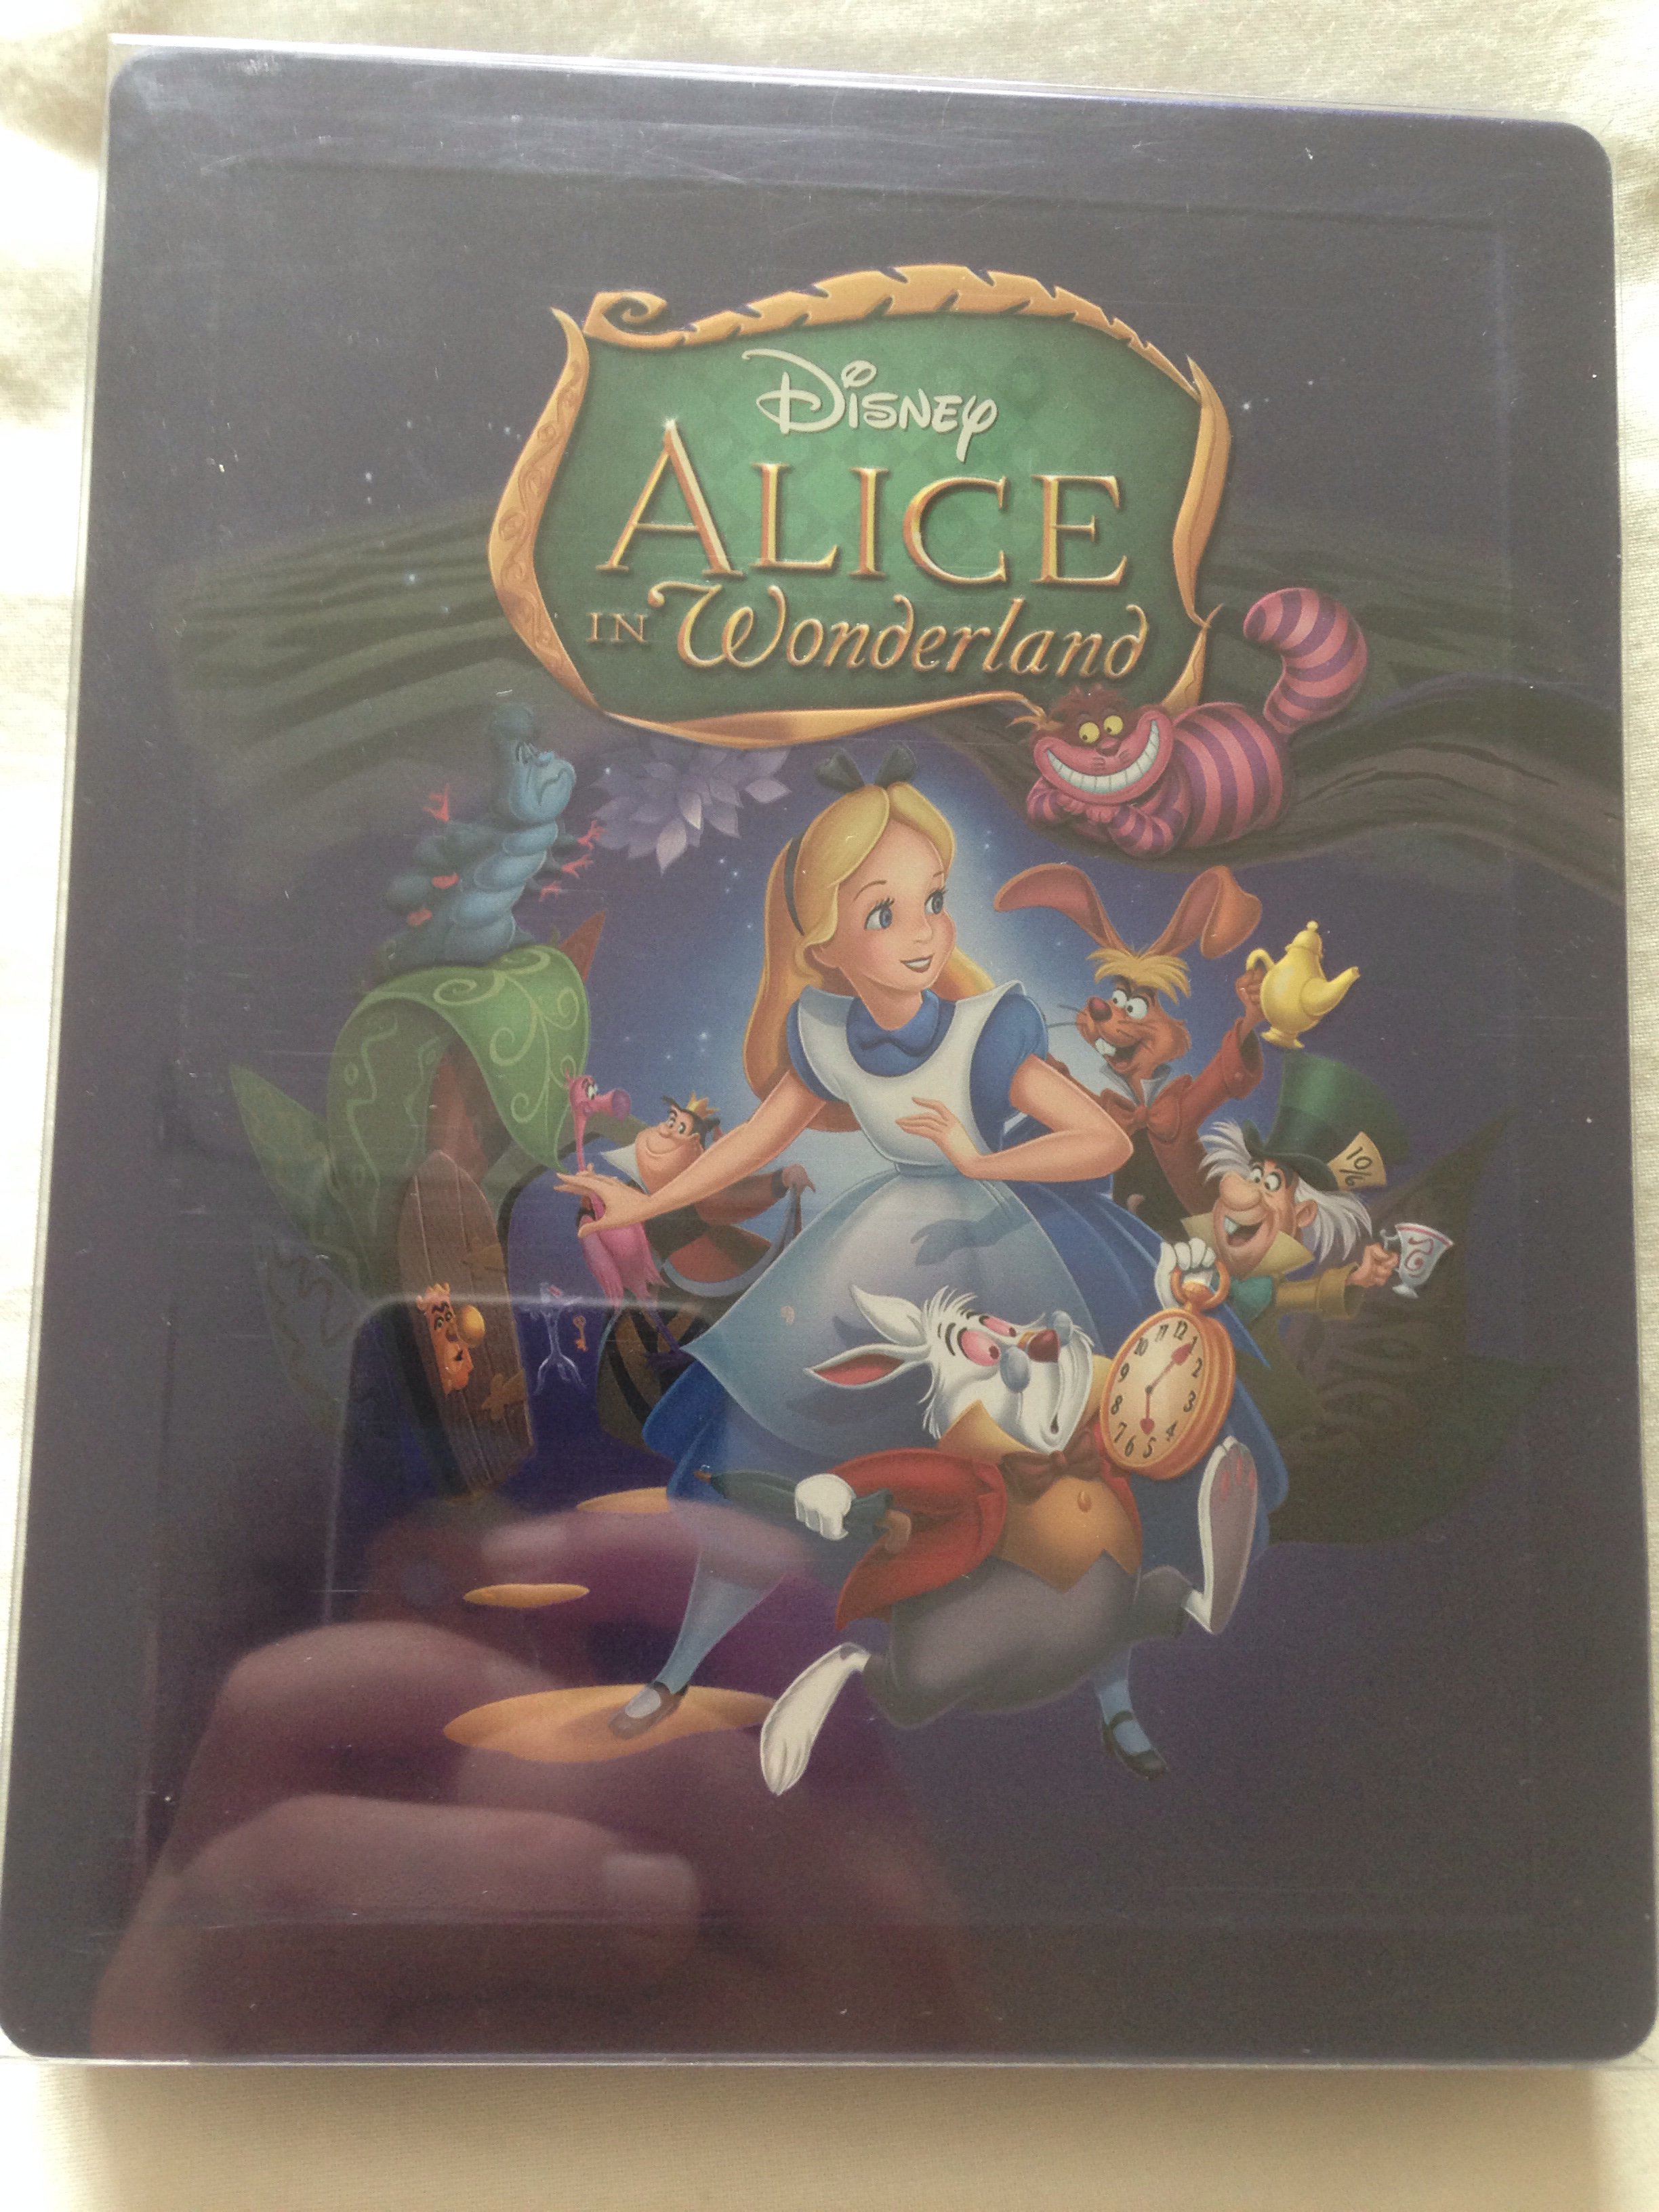 Alice in wonderland zavvi steelbook | Hi-Def Ninja - Pop Culture ...